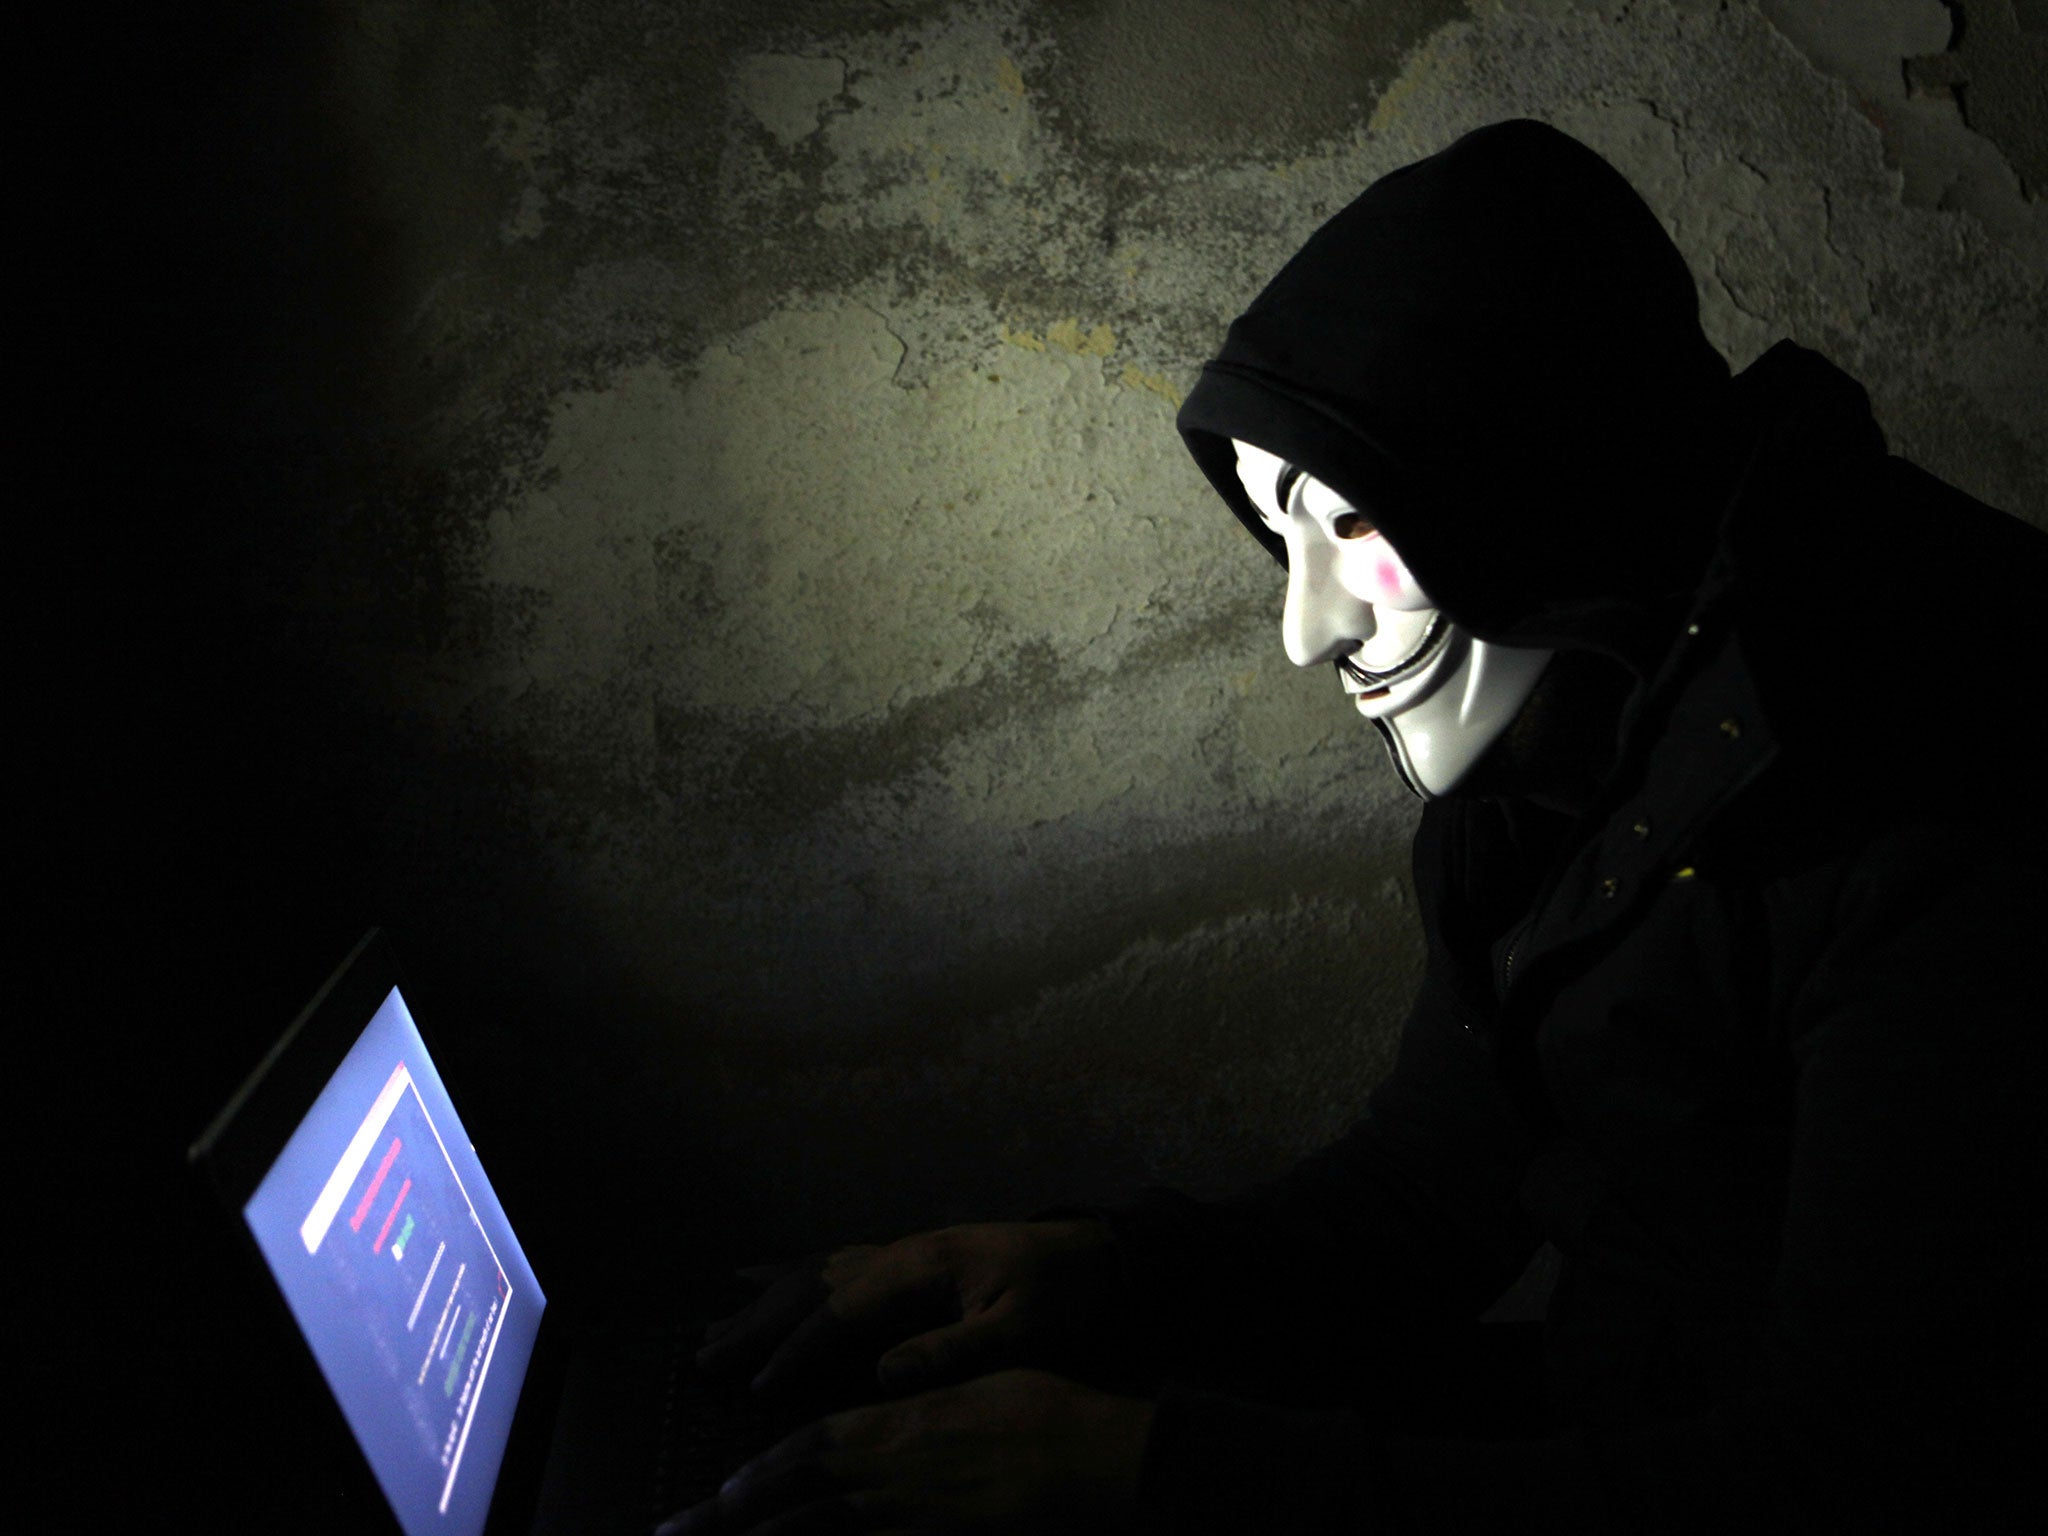 A hacker wearing a Vendetta mask using a laptop